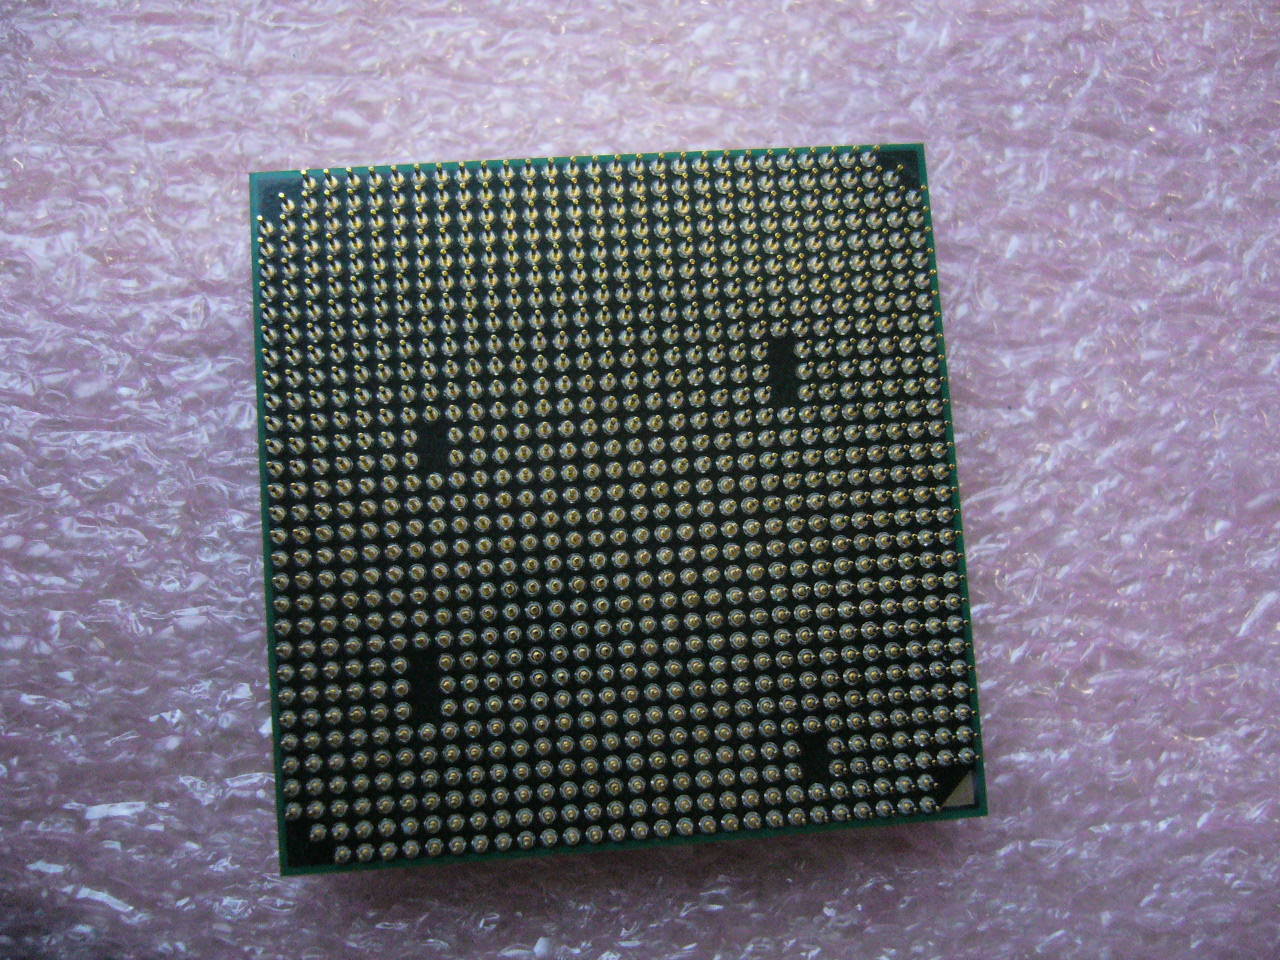 QTY 1x AMD Athlon II X3 435 2.9 GHz Triple-Core (ADX435WFK32GM) CPU AM3 938-Pin - Click Image to Close